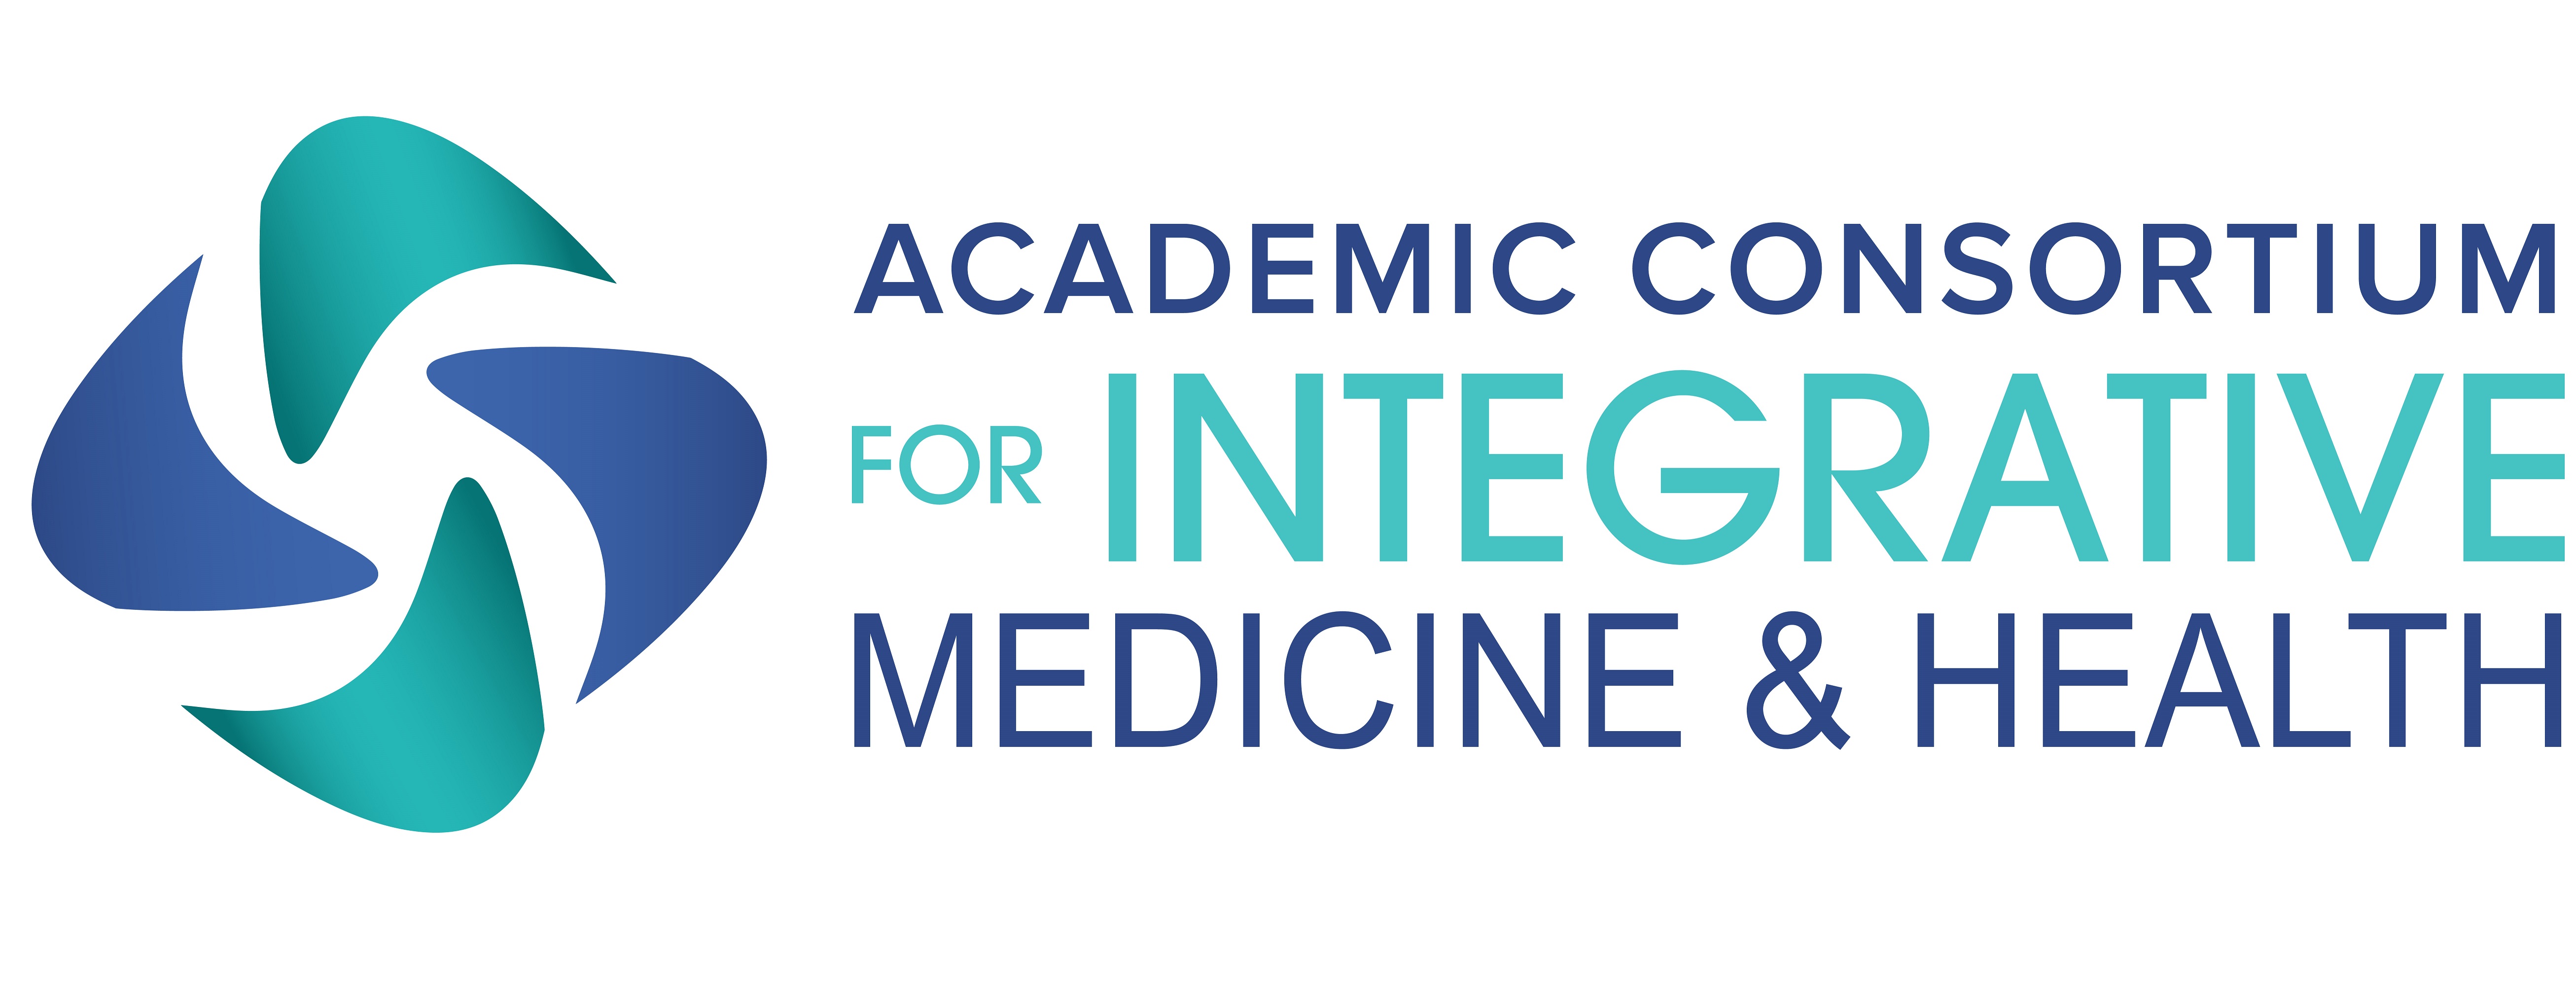 Academic Consortium for Integrative Medicine & Health Logo